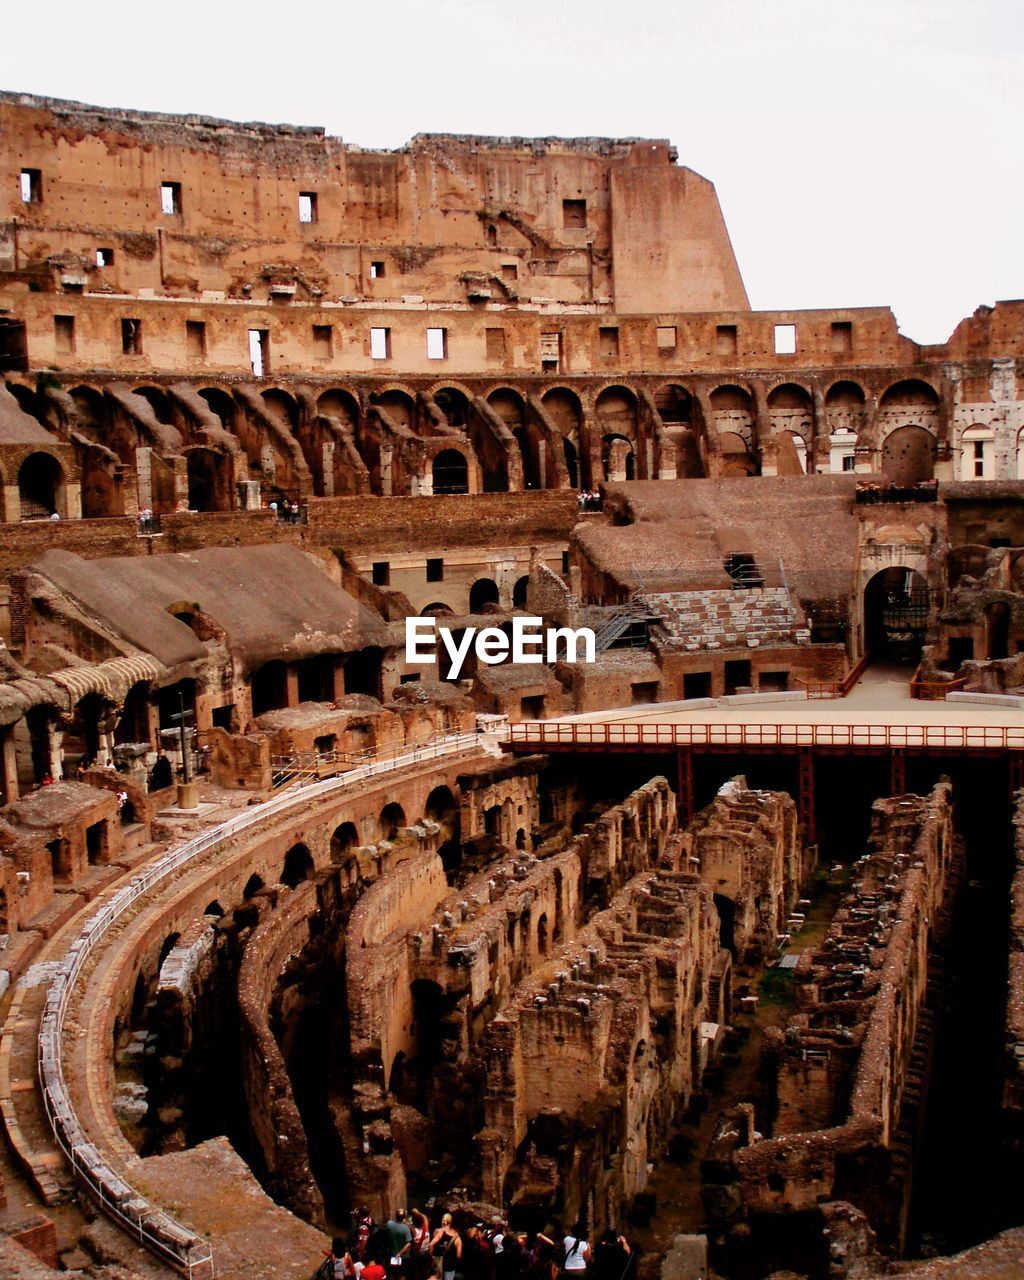 The colosseum rome